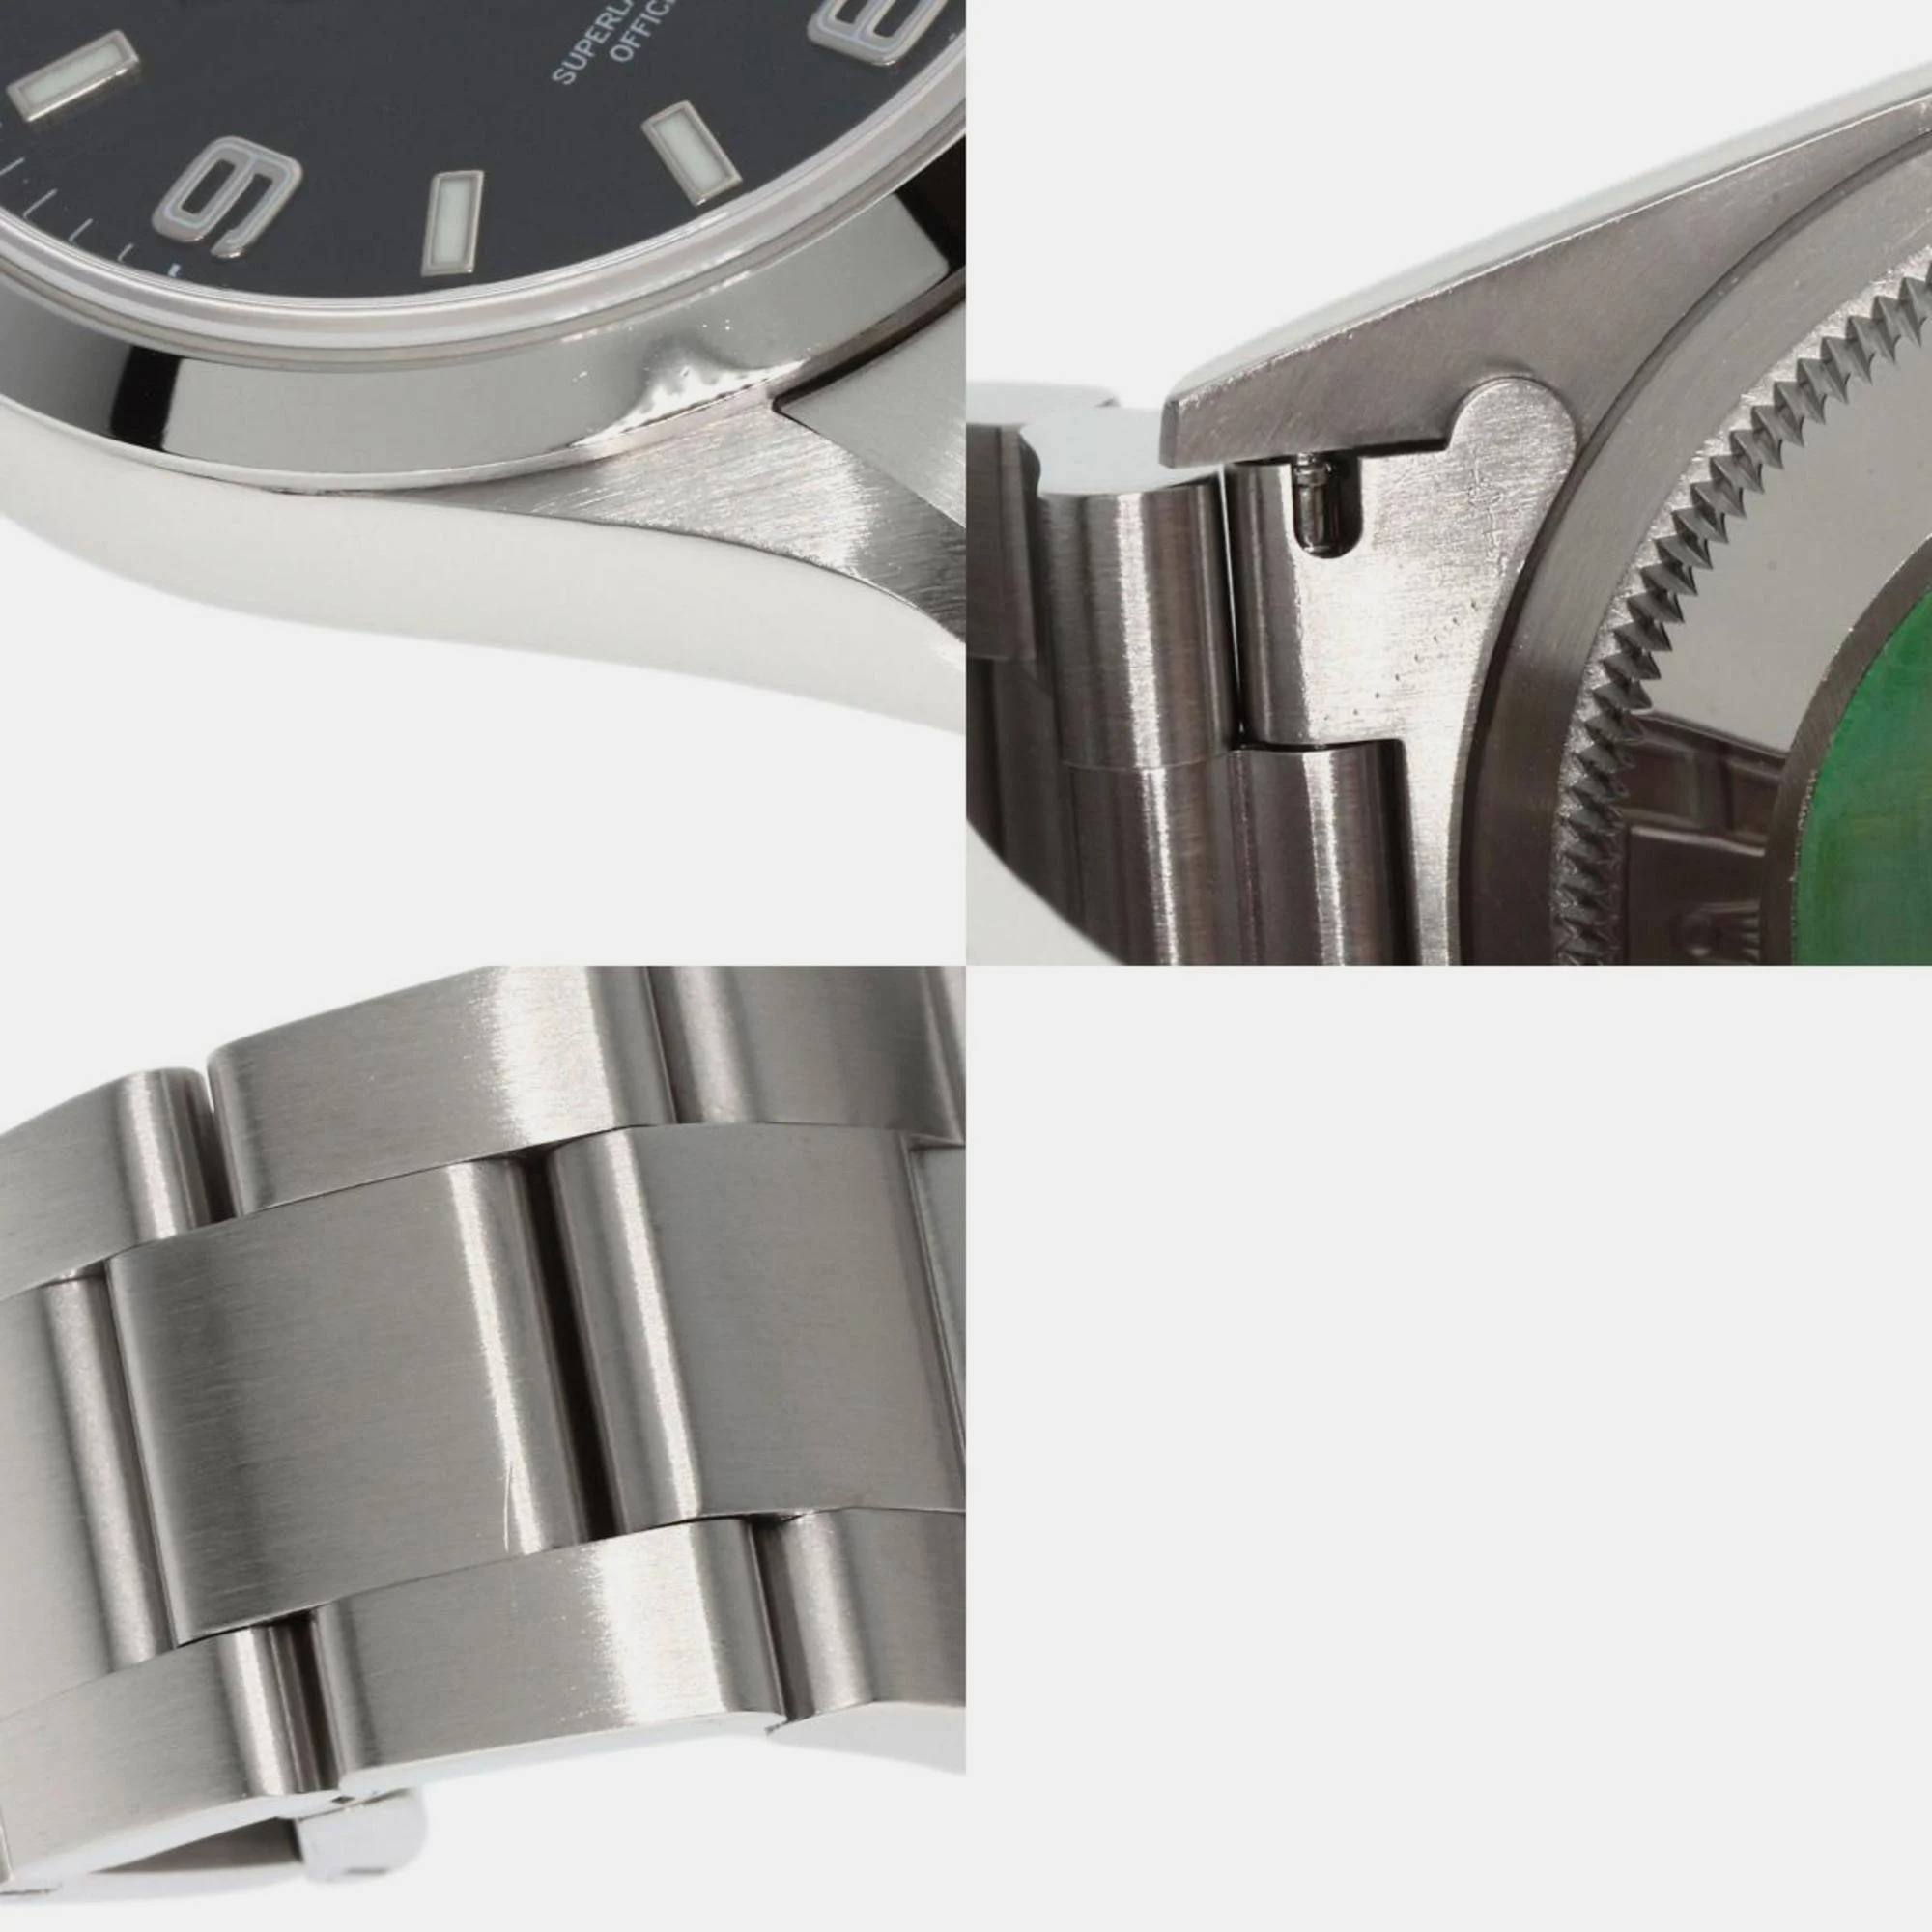 Rolex Black Stainless Steel Datejust 14270 Automatic Men's Wristwatch 36 Mm